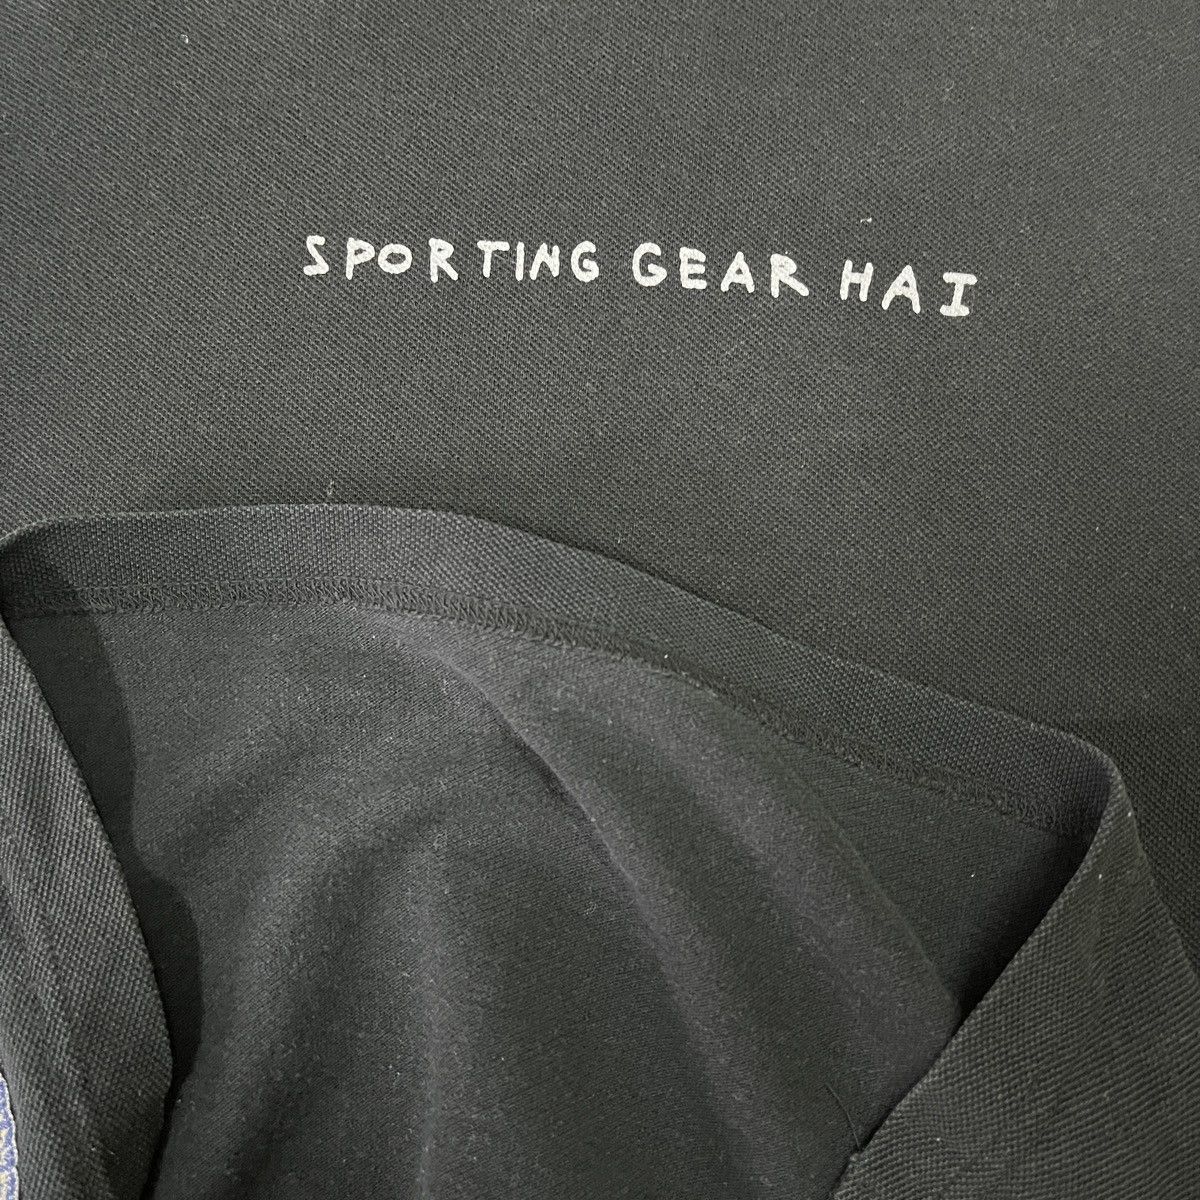 Vintage Hai Sporting Gear Lacoste Cotton TShirt - 15